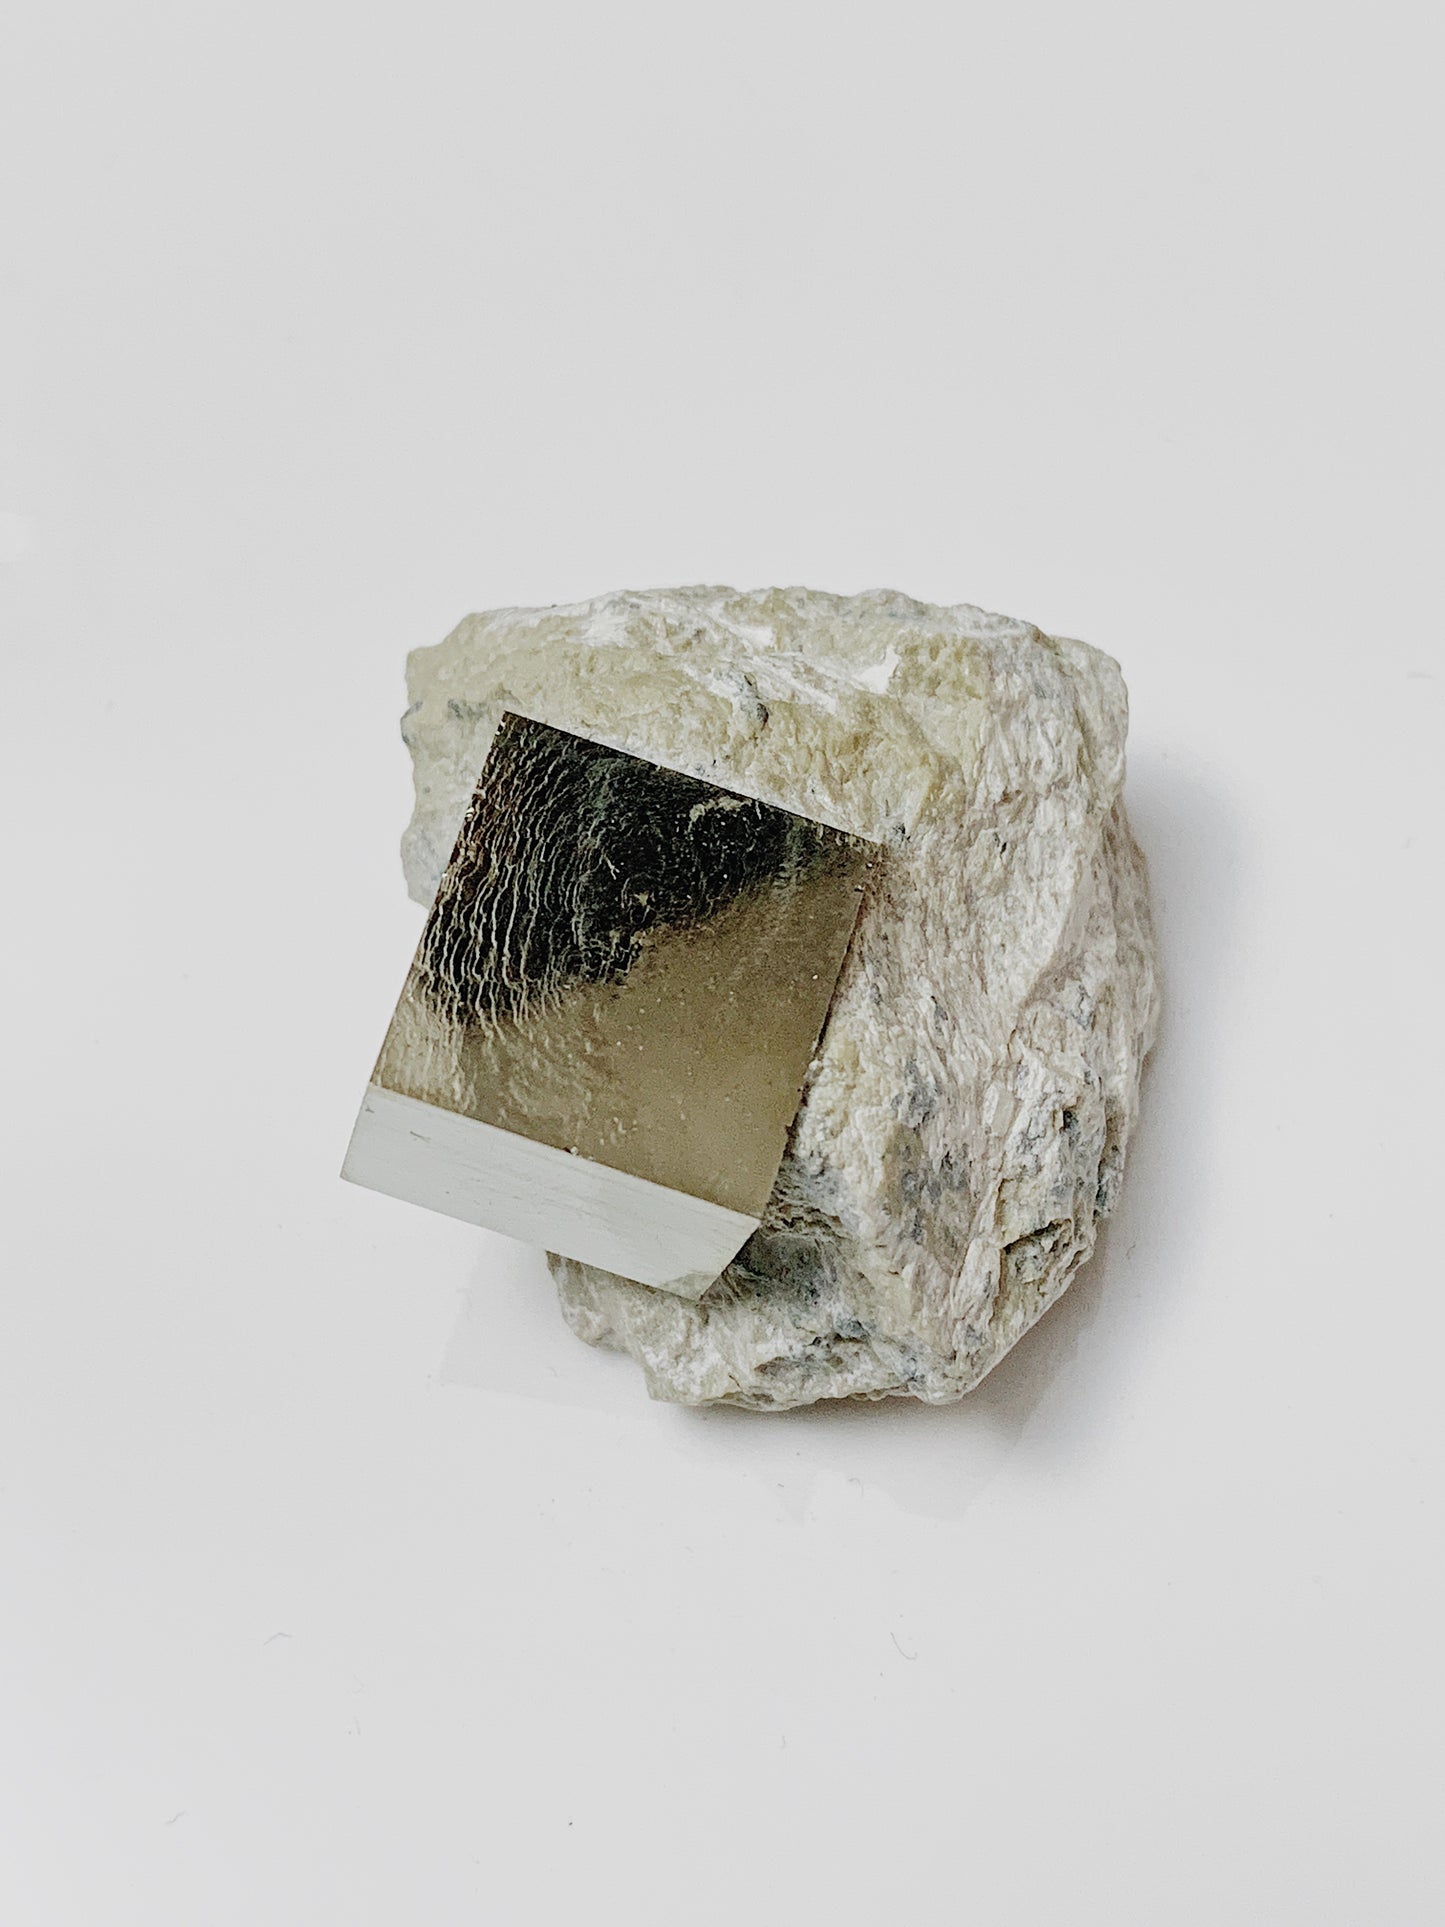 [Crystal] Pyrite on Matrix (Cubic Crystal) Spain